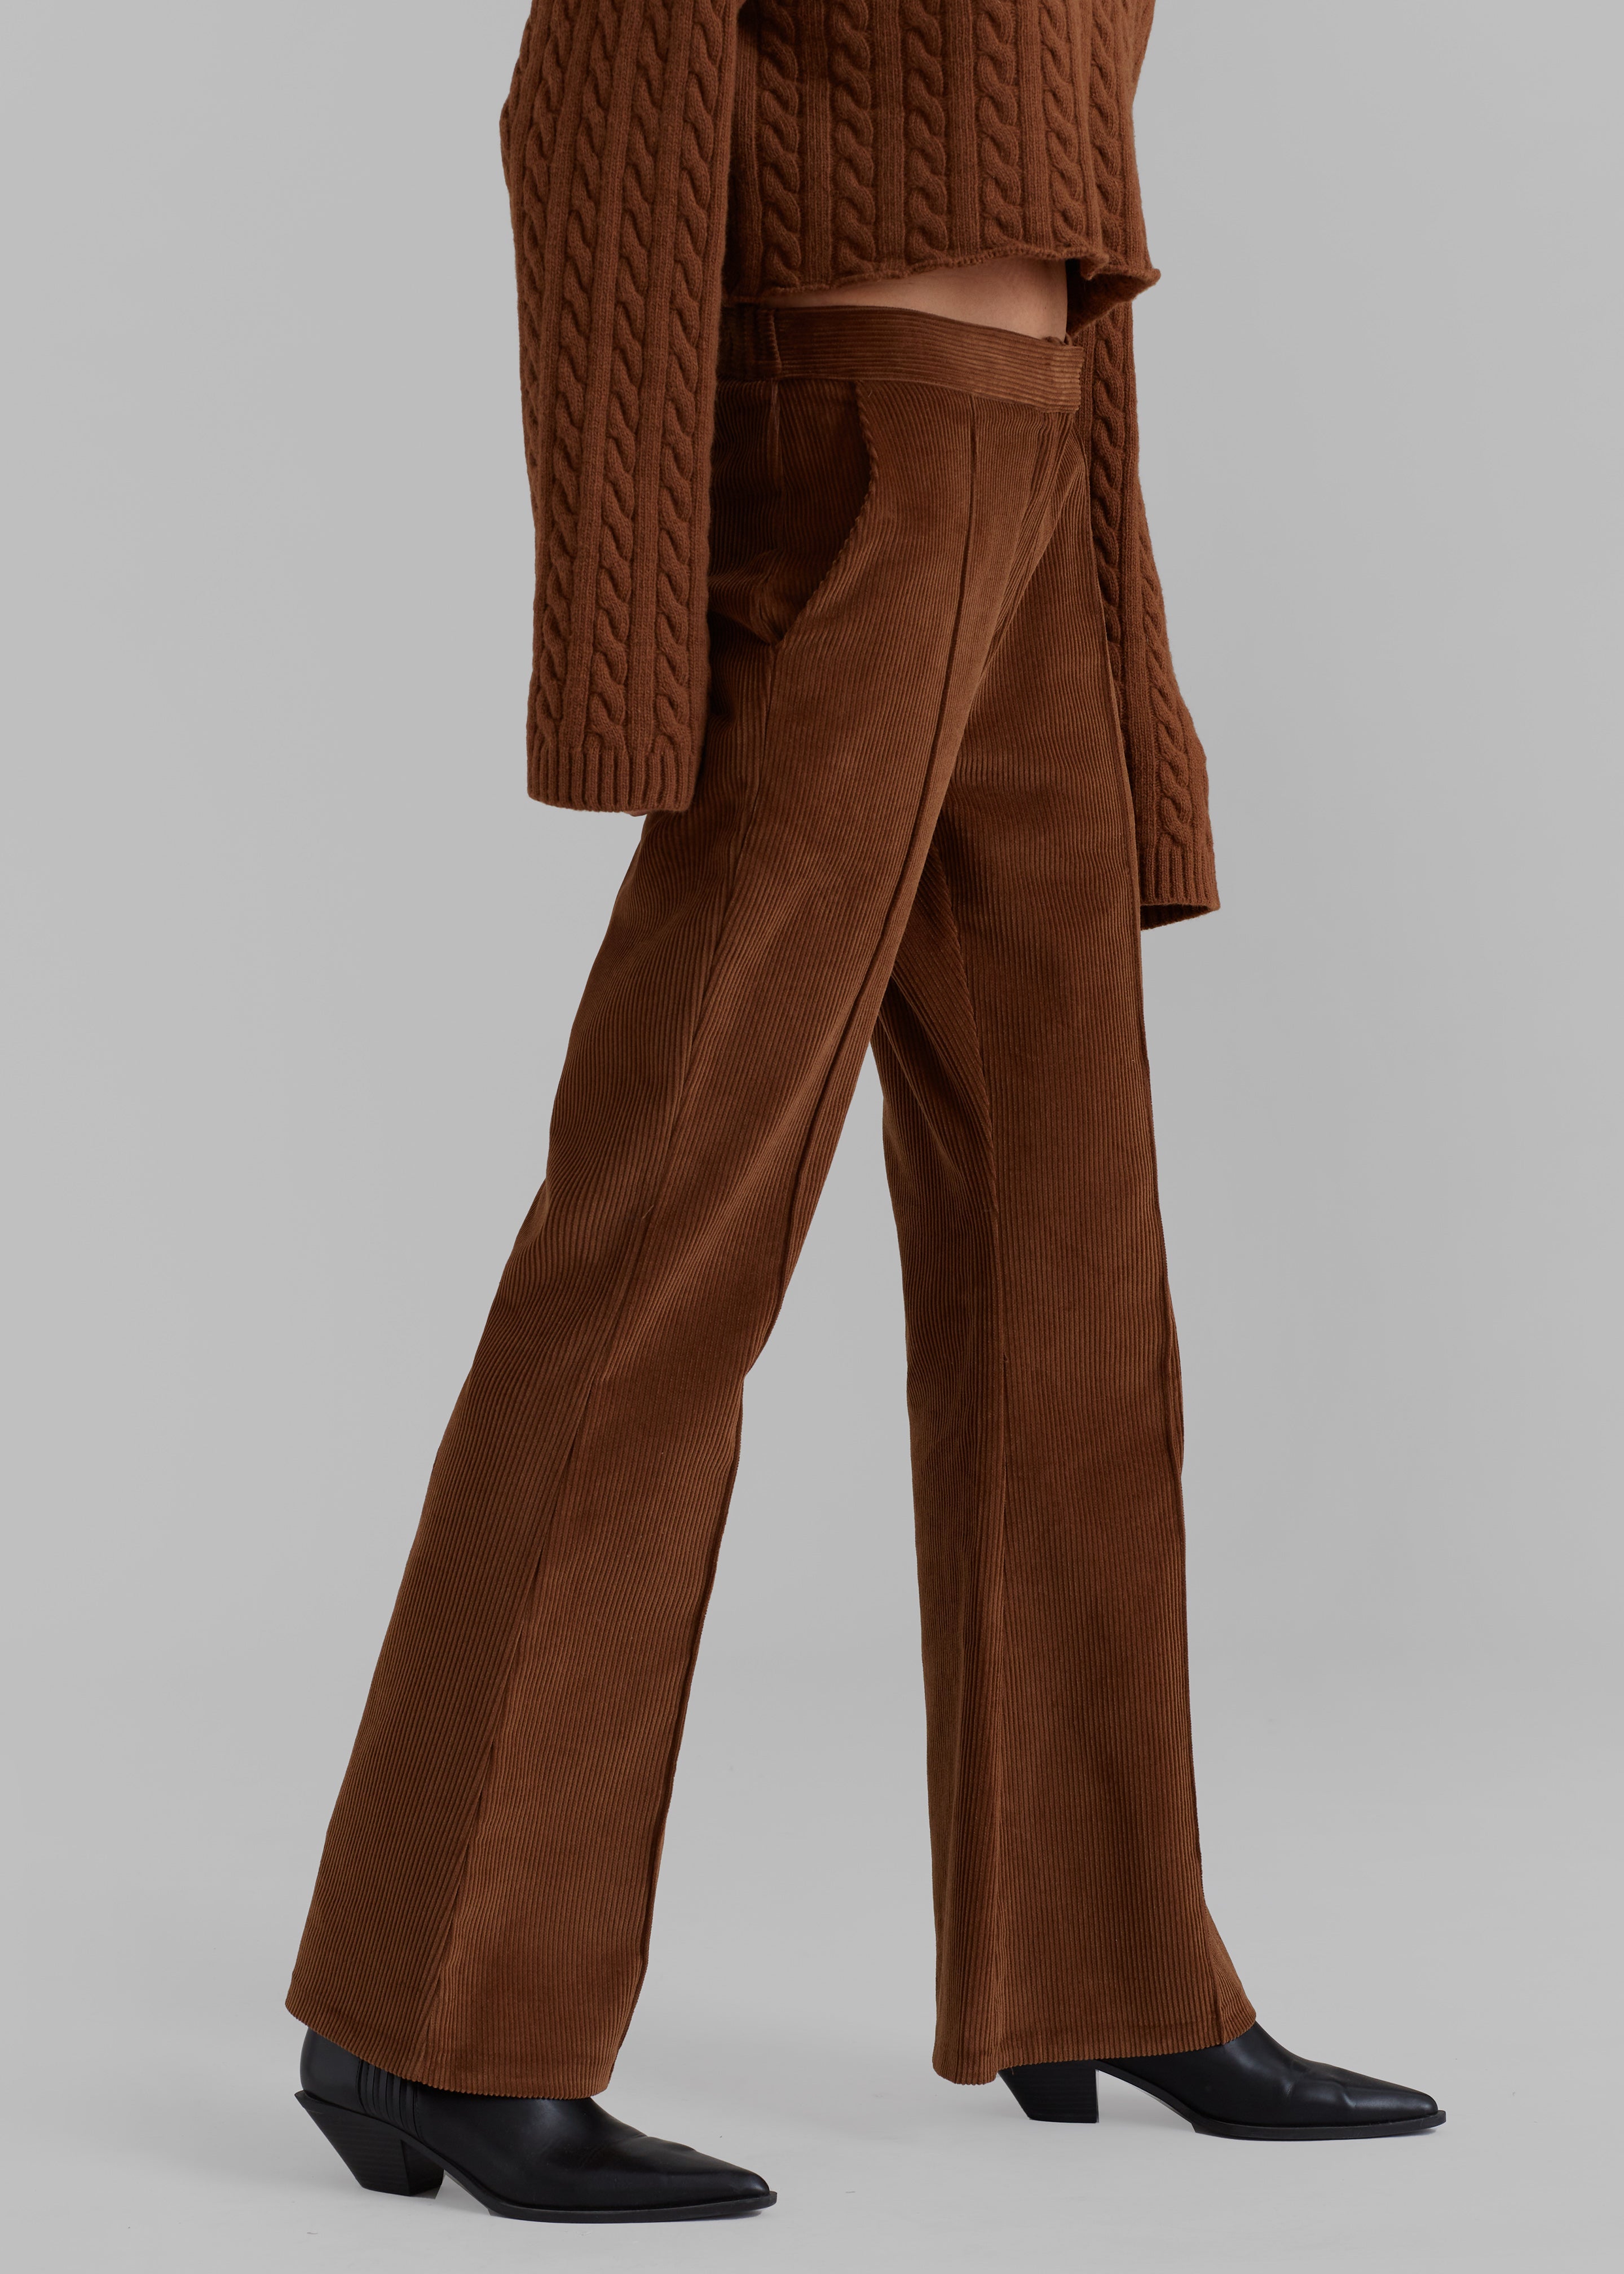 Lydian Corduroy Flare Pants - Brown - 2